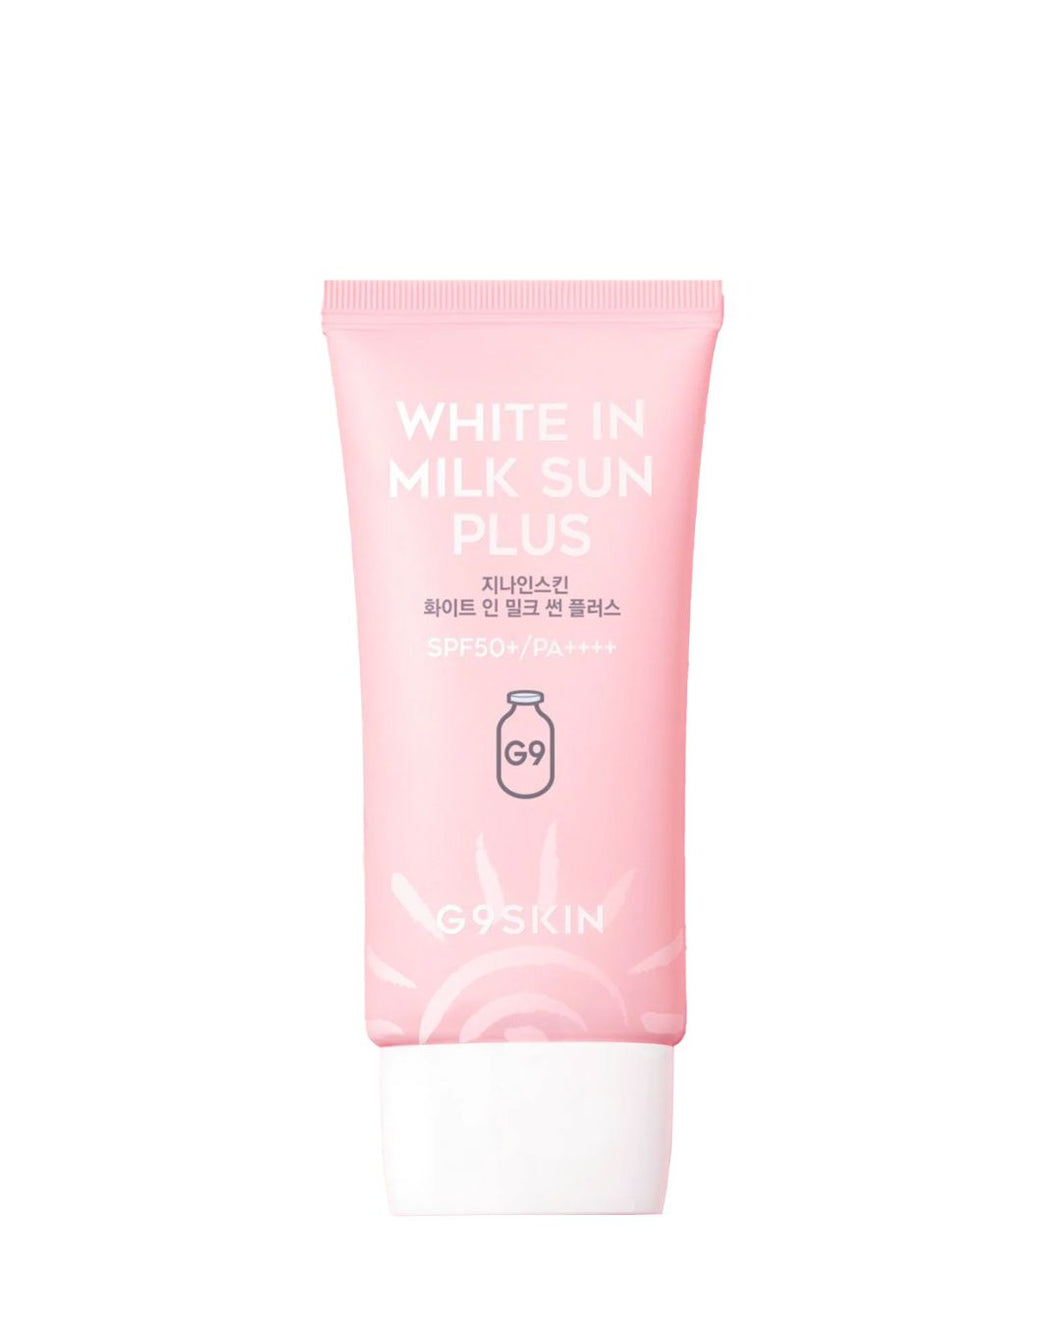 G9 Skin - White In milk sun 40 ml - SPF 50+ / PA++++